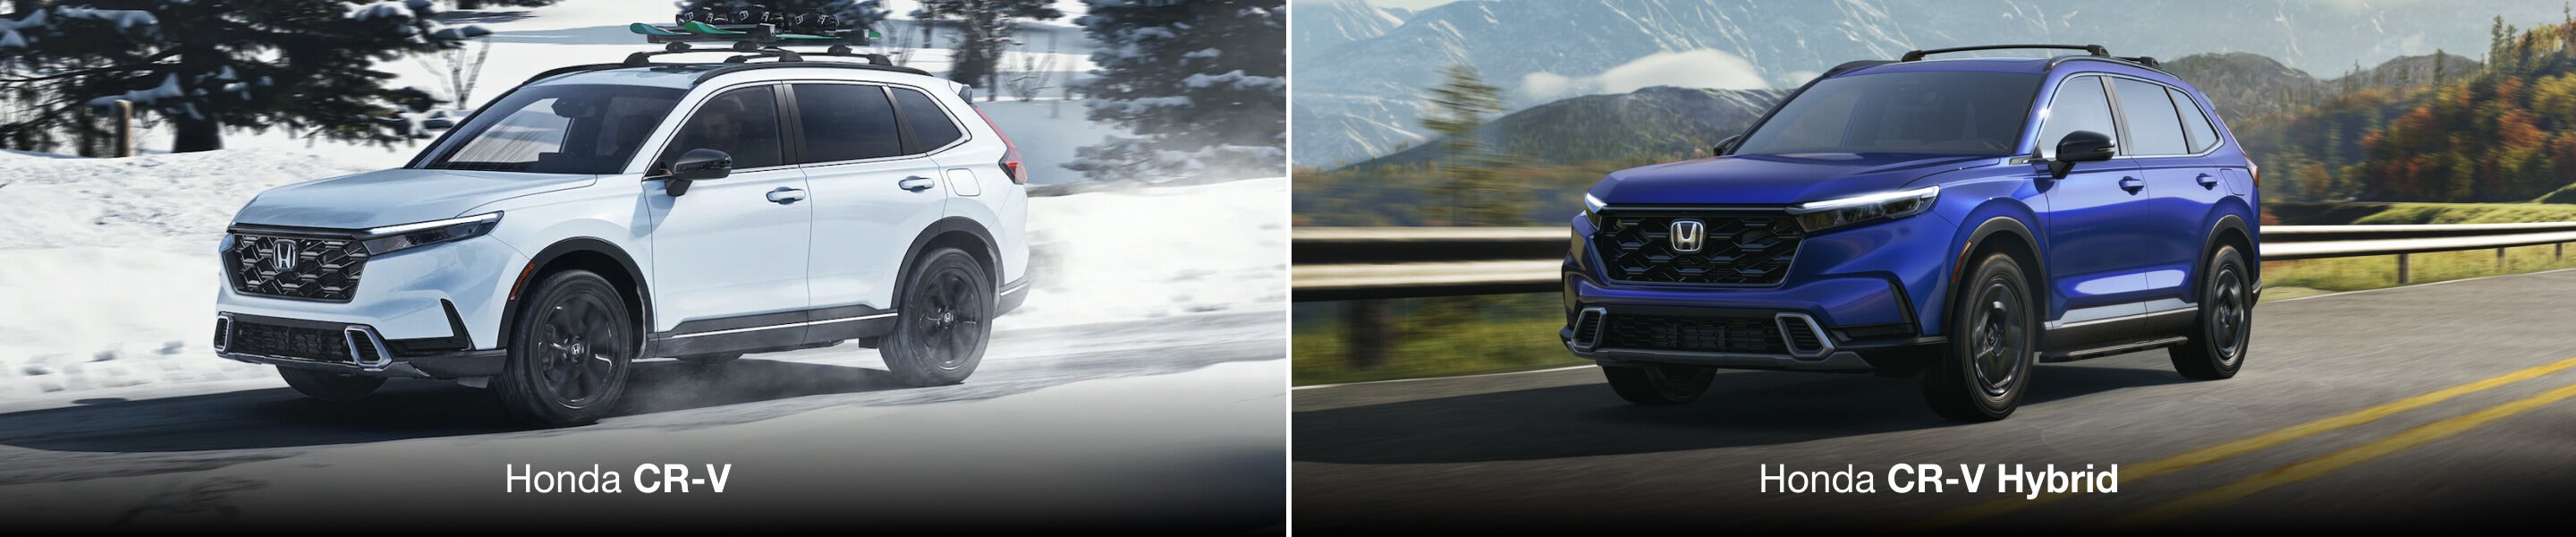 collage image of a Honda CR-V Honda CR-V Hybrid